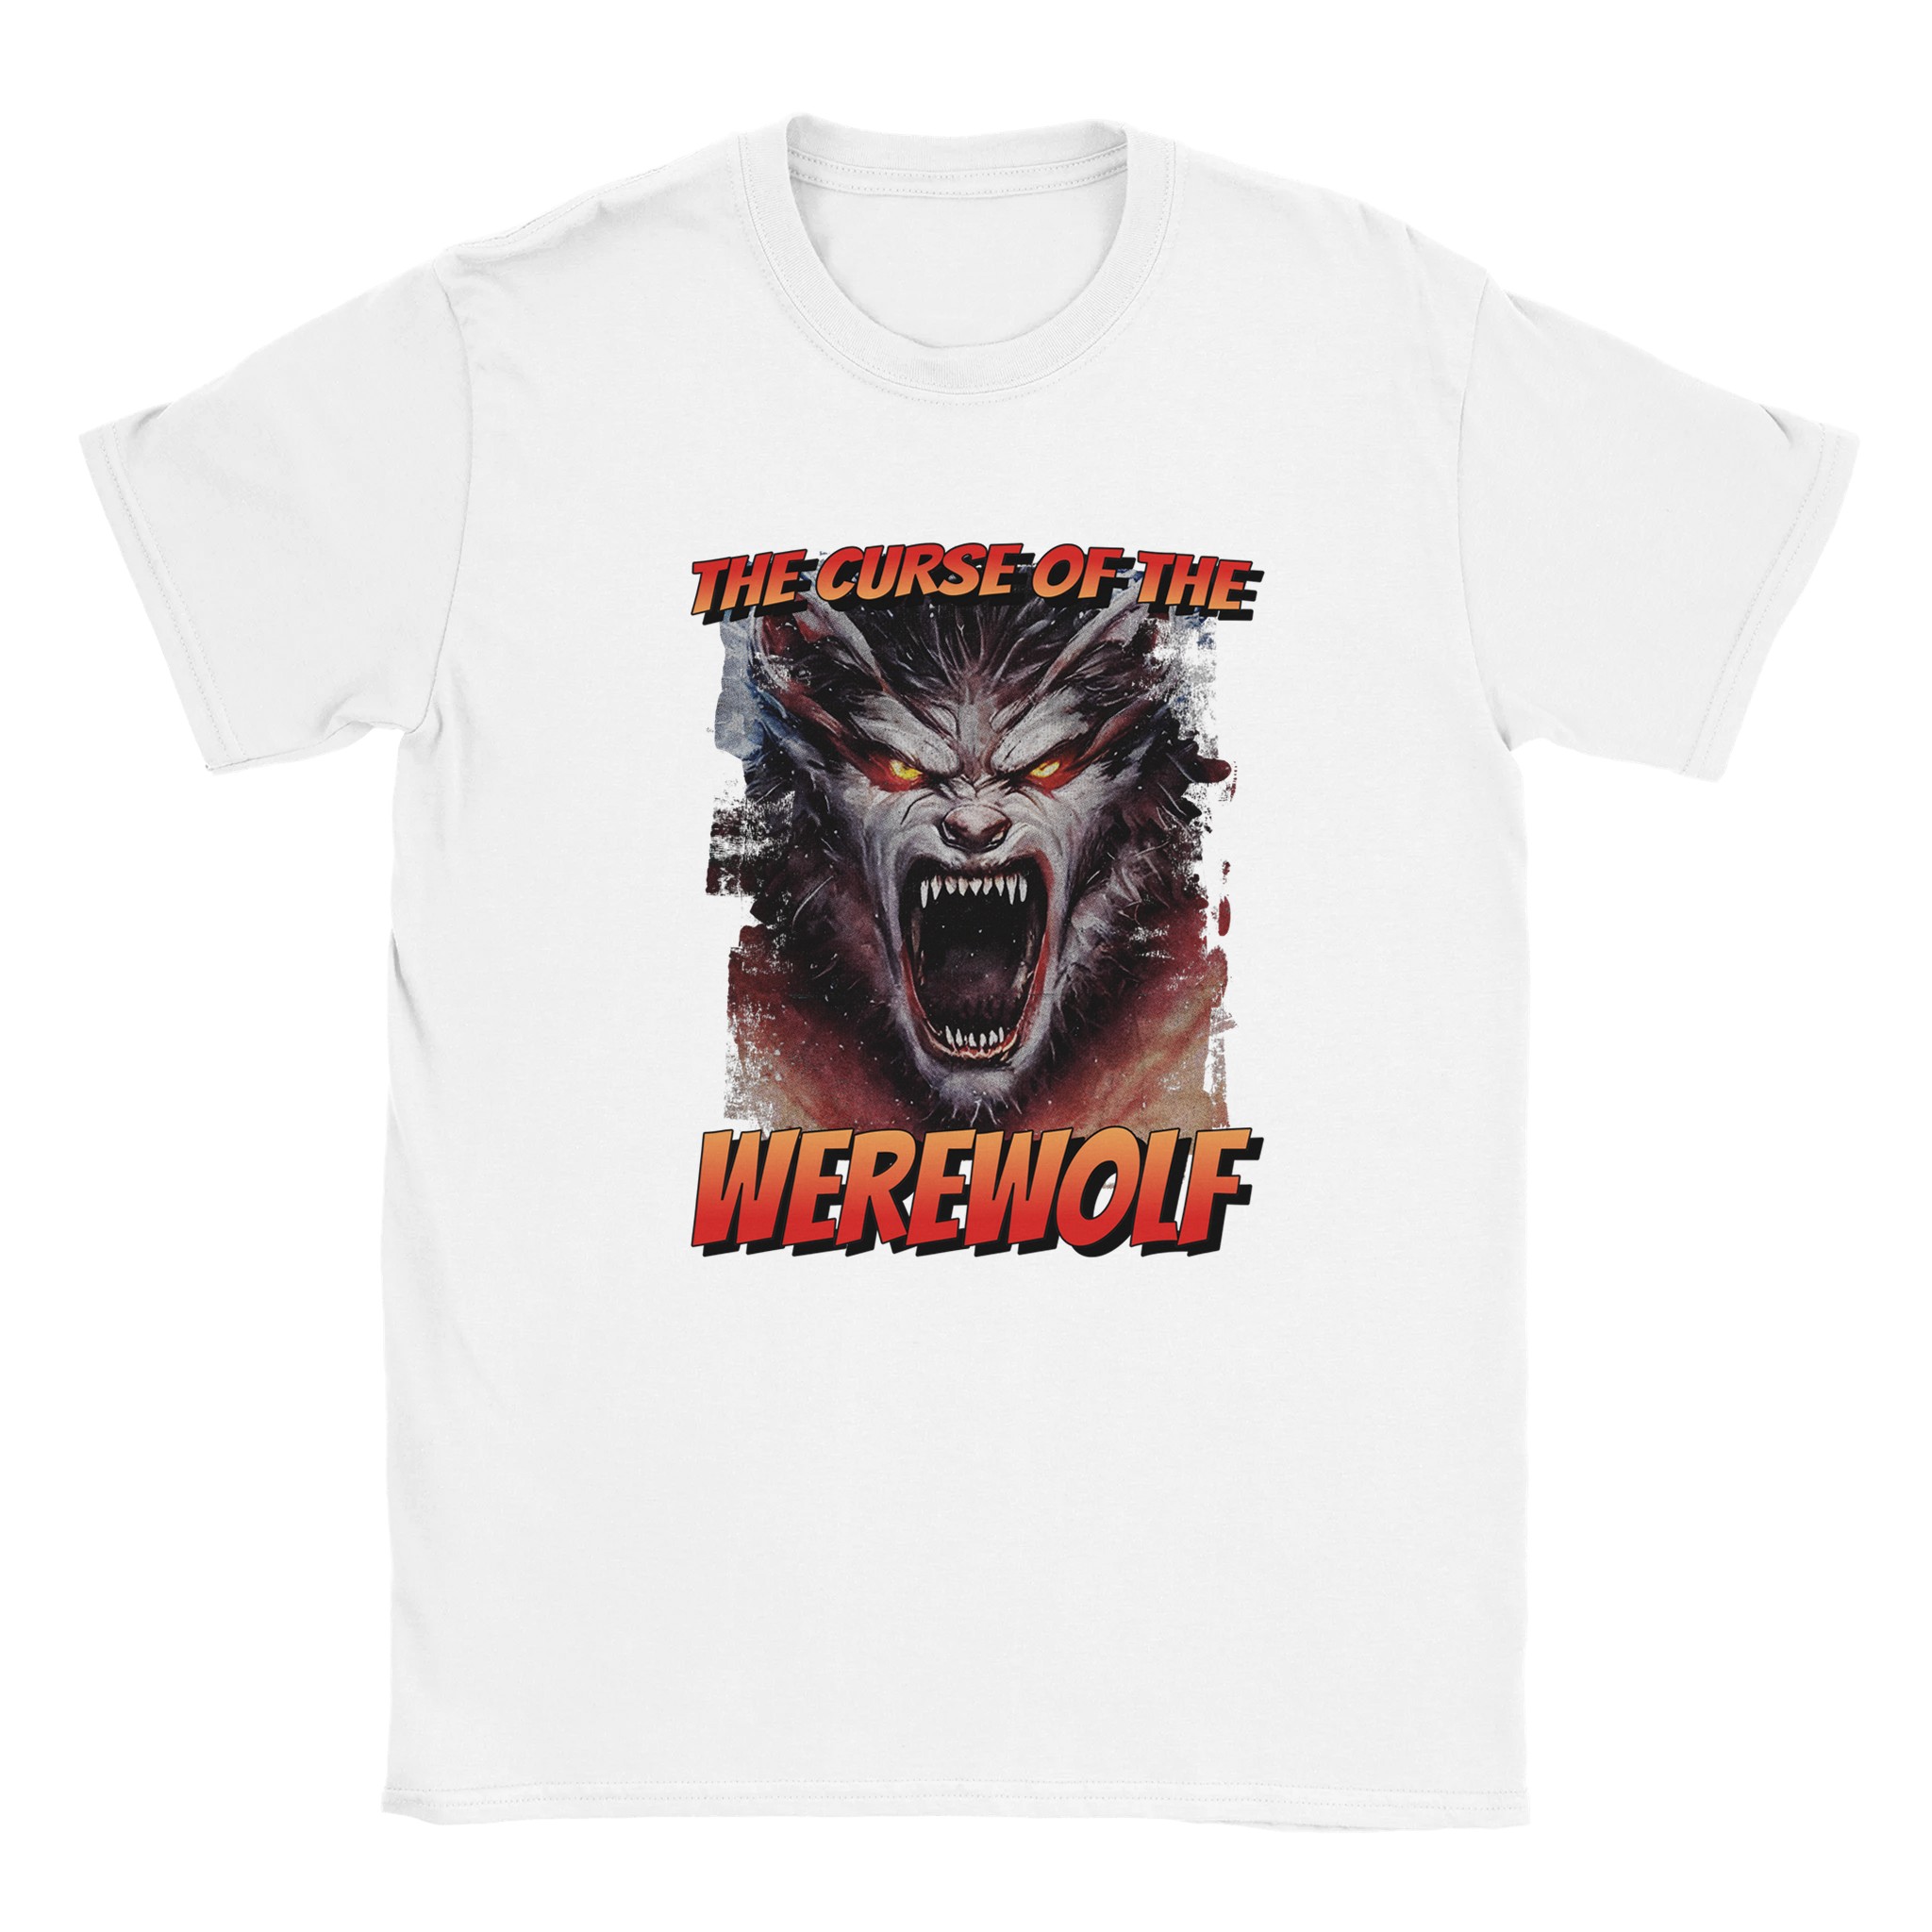 The Curse Of The Werewolf Tshirt design